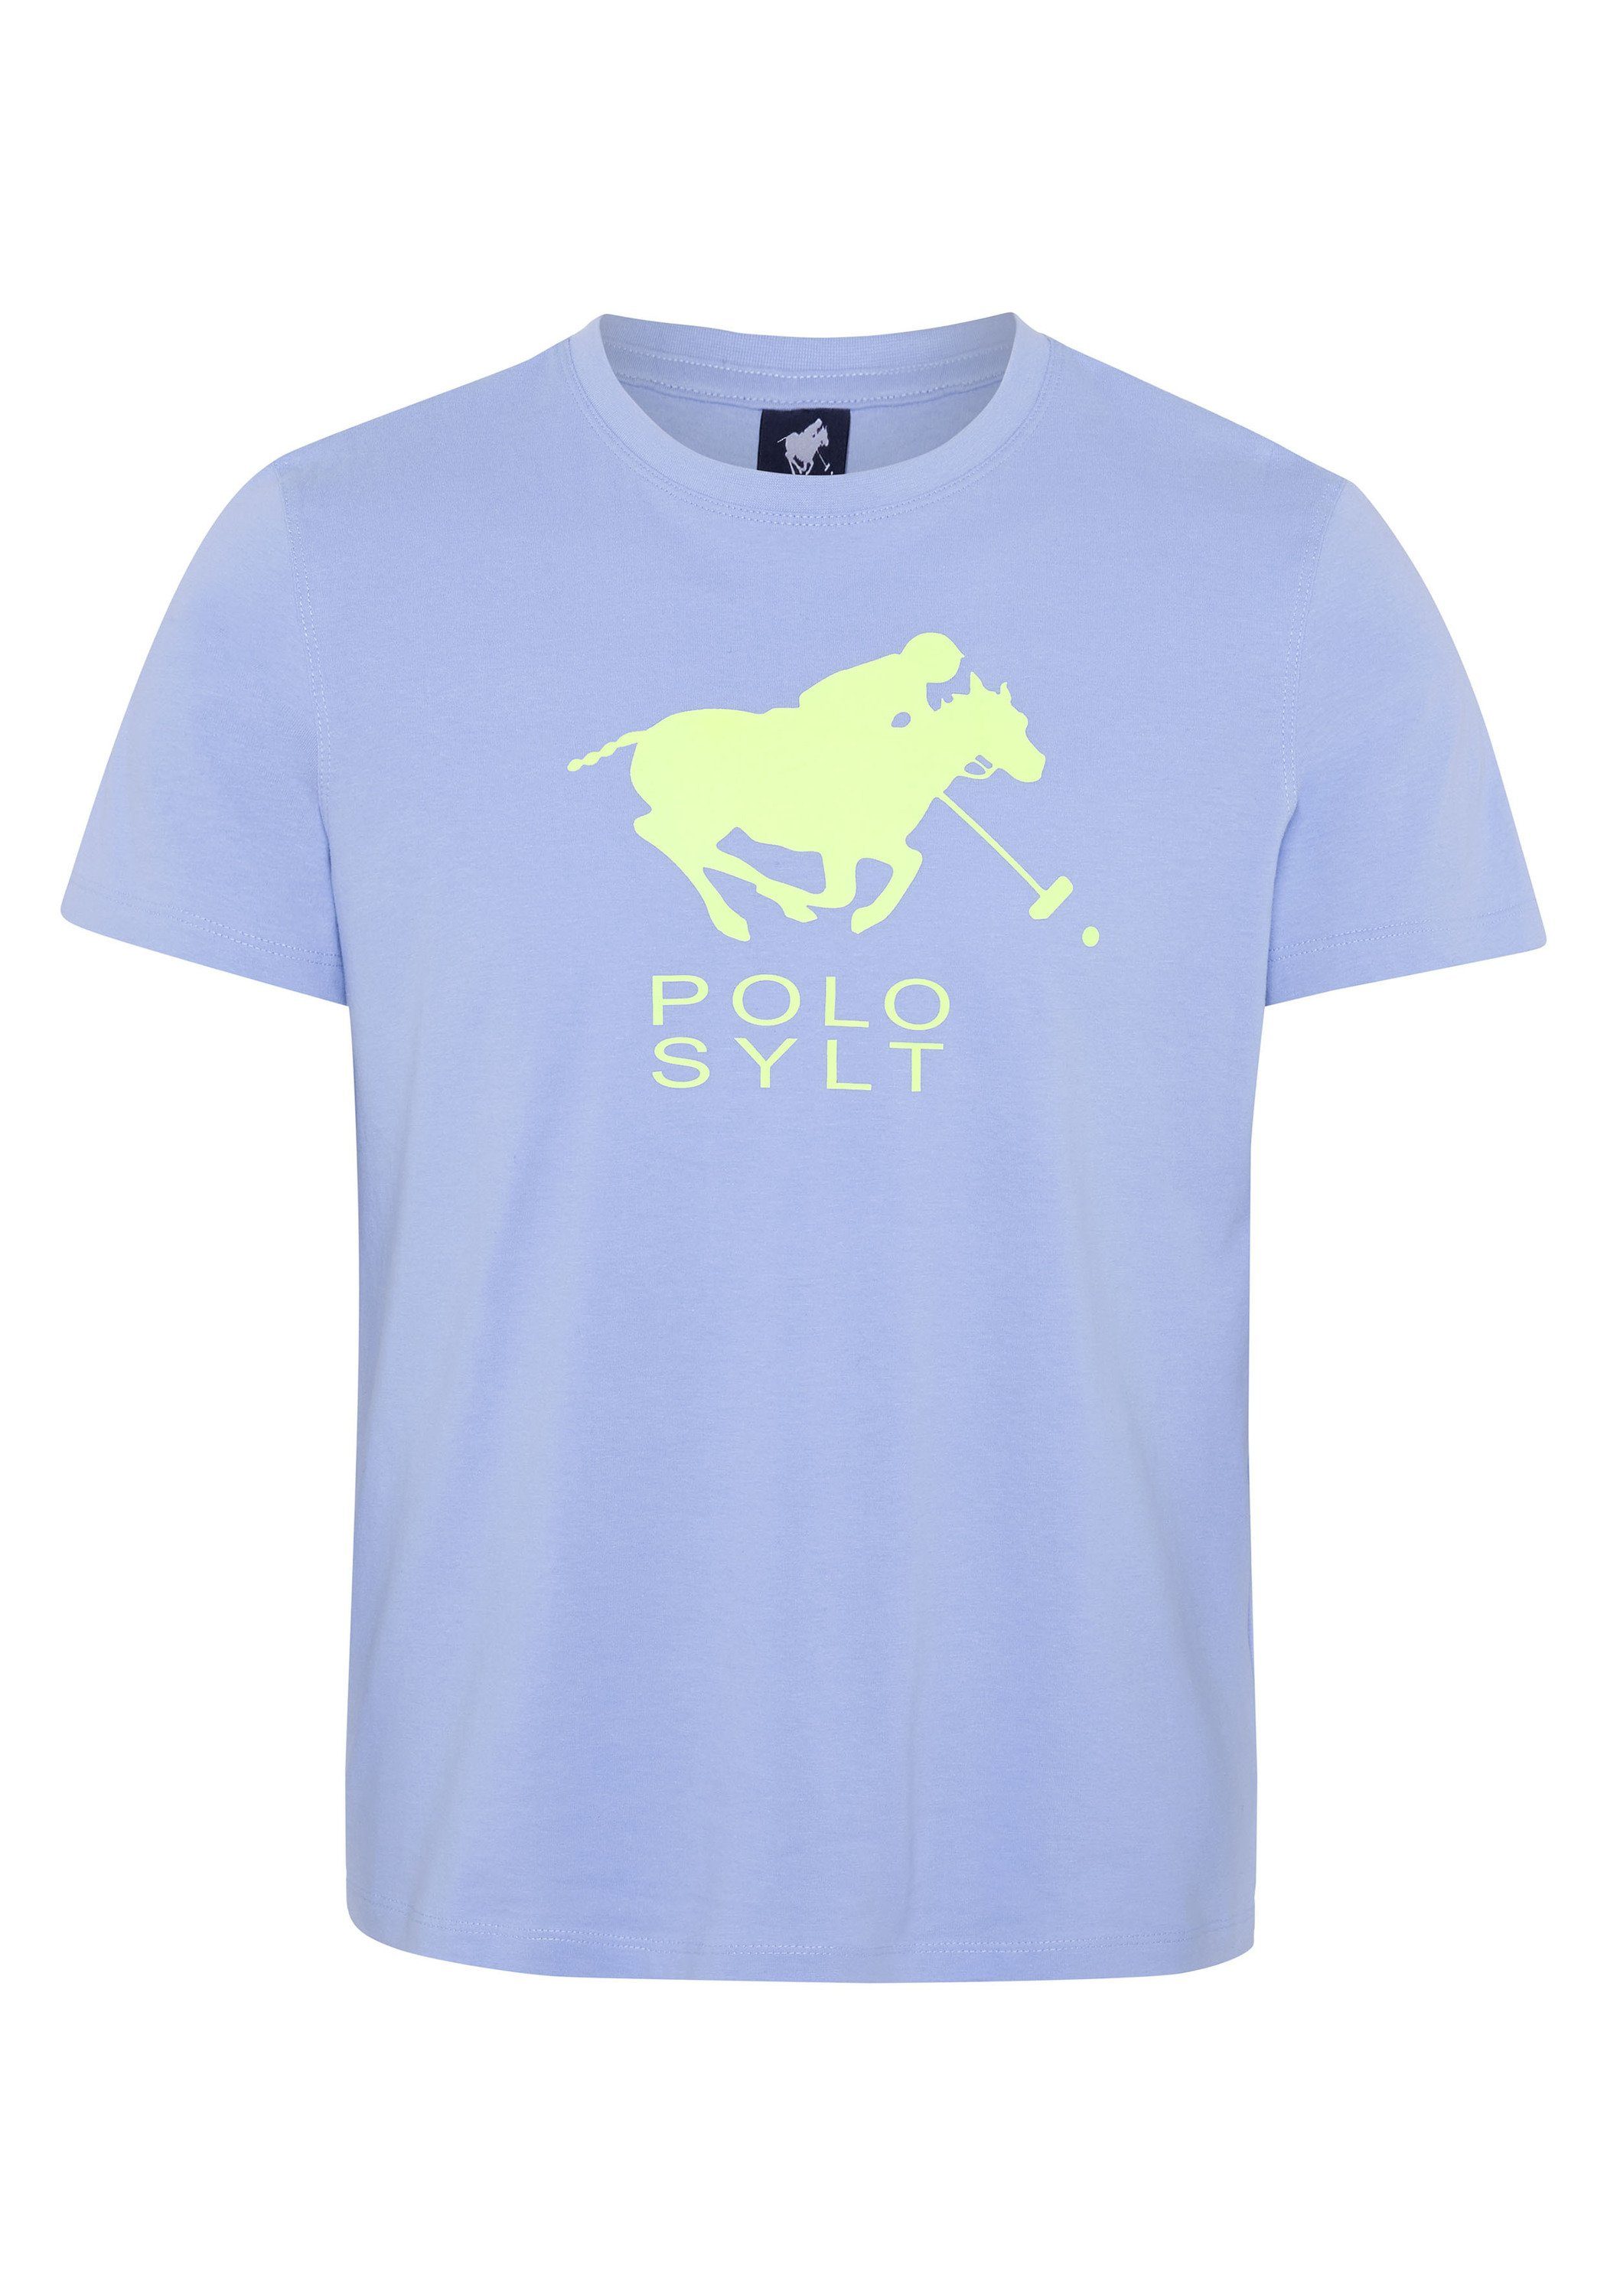 Polo Sylt Print-Shirt mit Neon Logo Frontprint 16-3922 Brunnera Blue